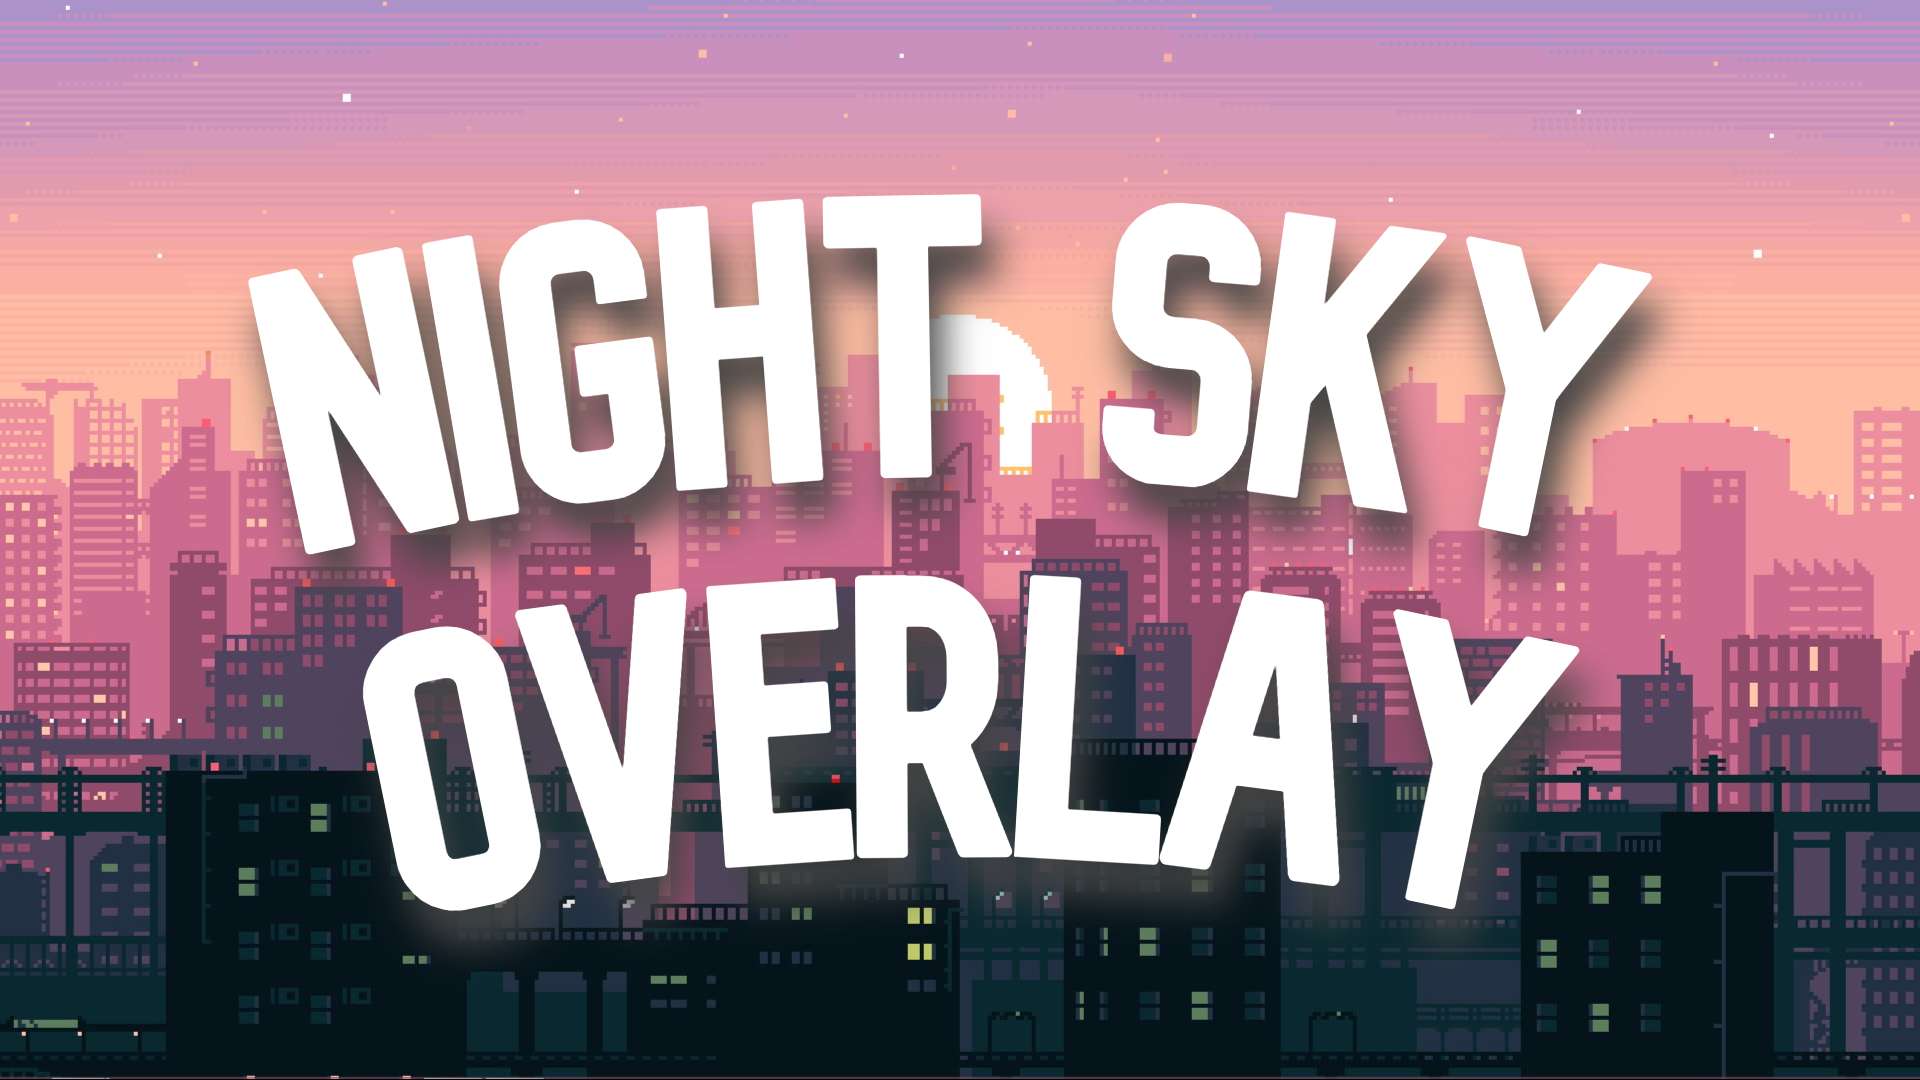 Night Sky Overlay #8 16 by rh56 on PvPRP